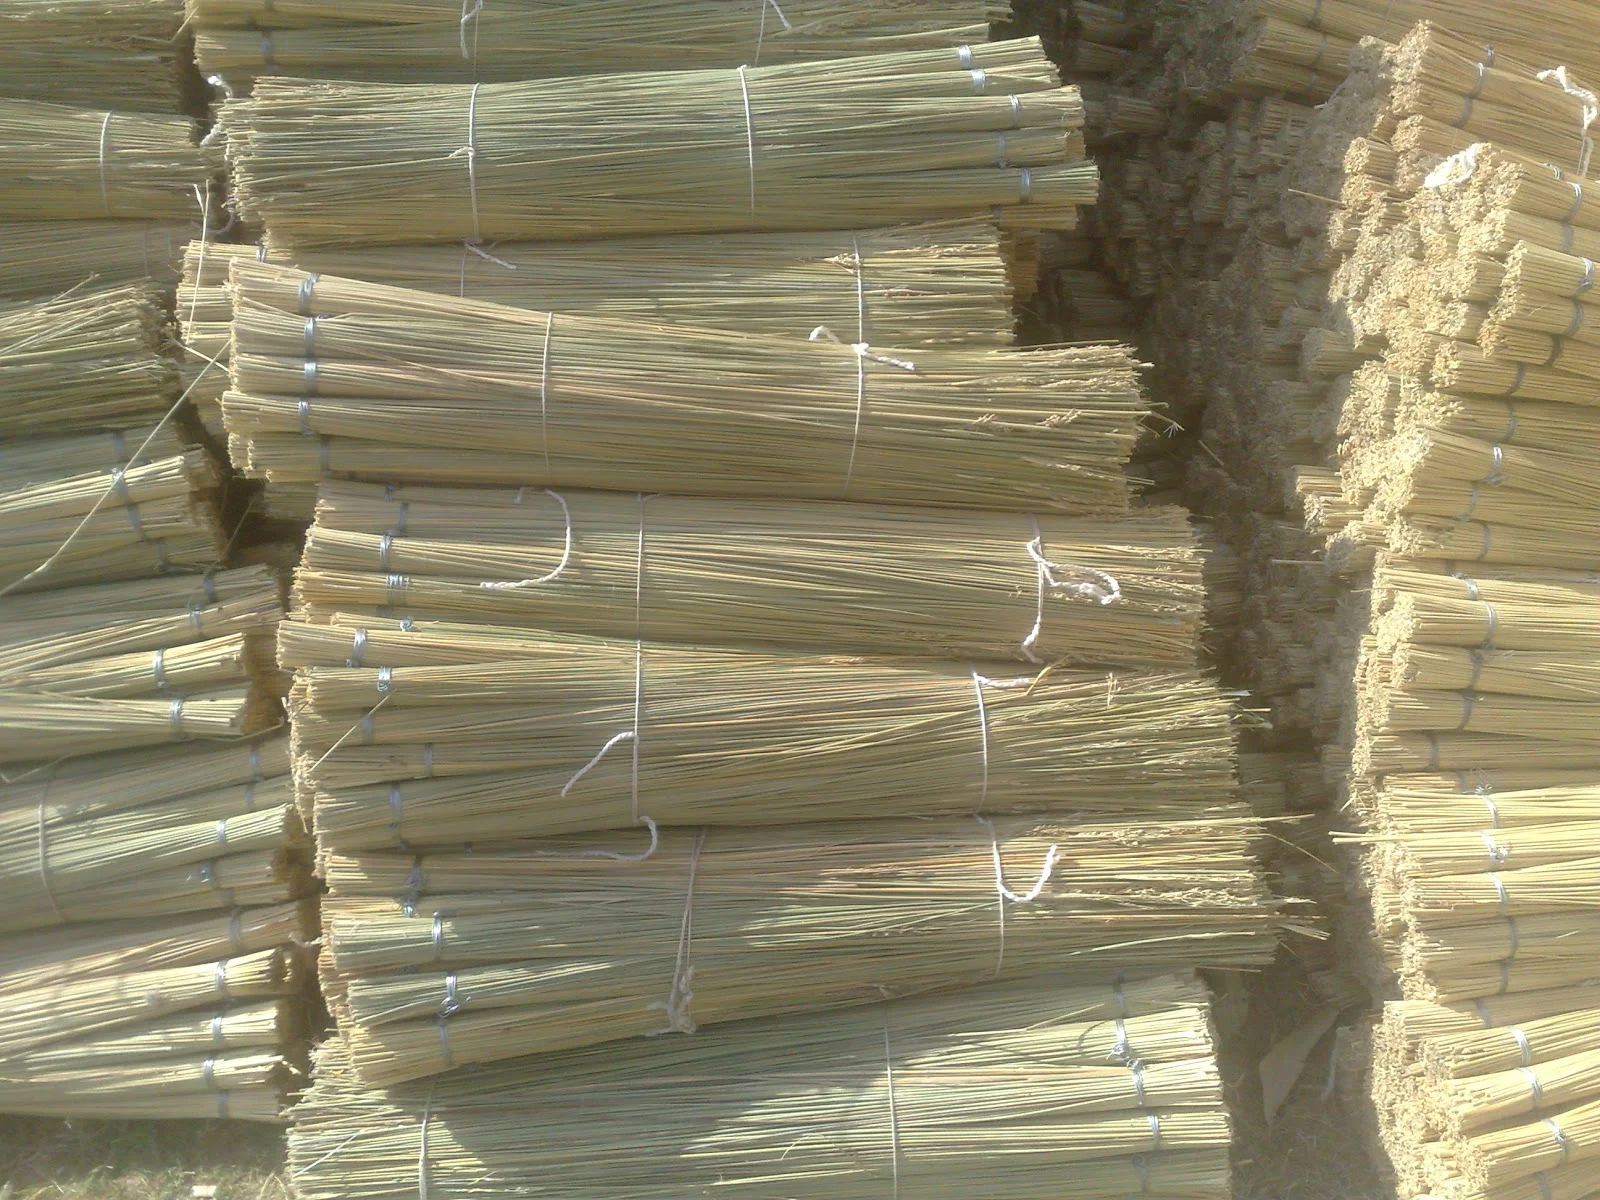 African reed bundles